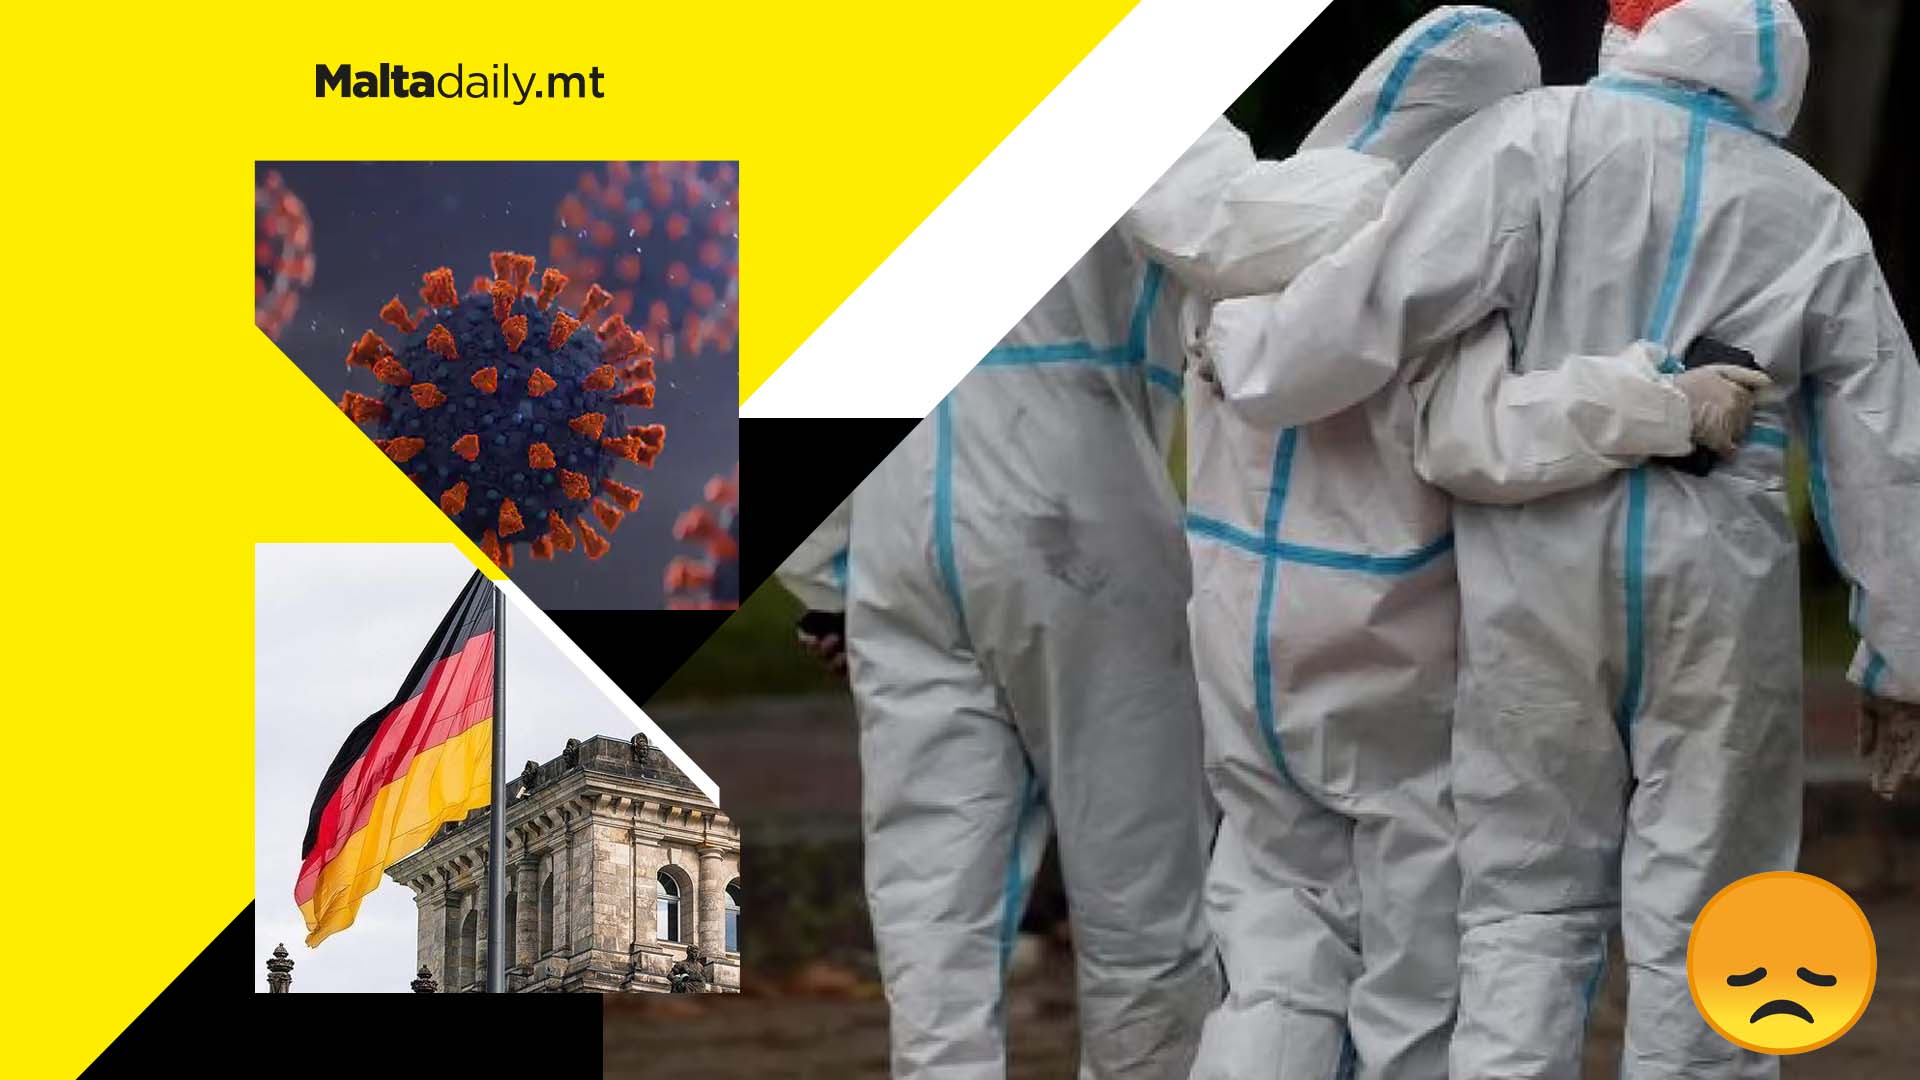 Germany surpasses 100,000 COVID deaths as pandemic worsens worldwide